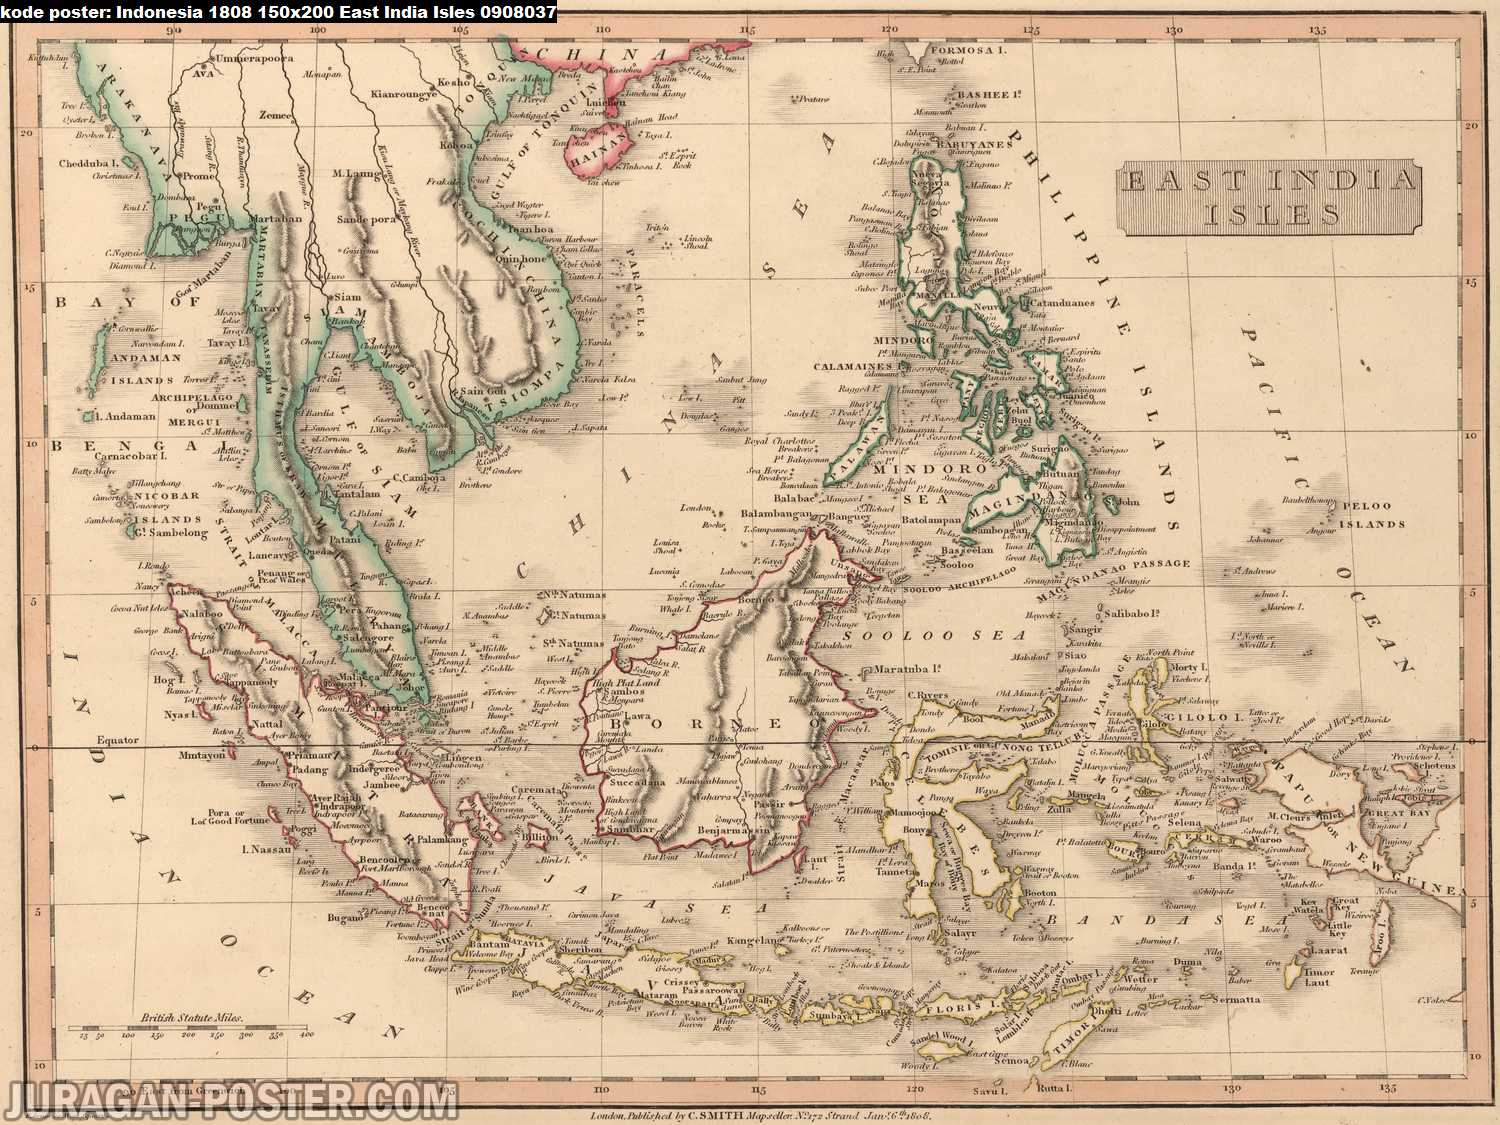 peta indonesia kuno tahun 1808